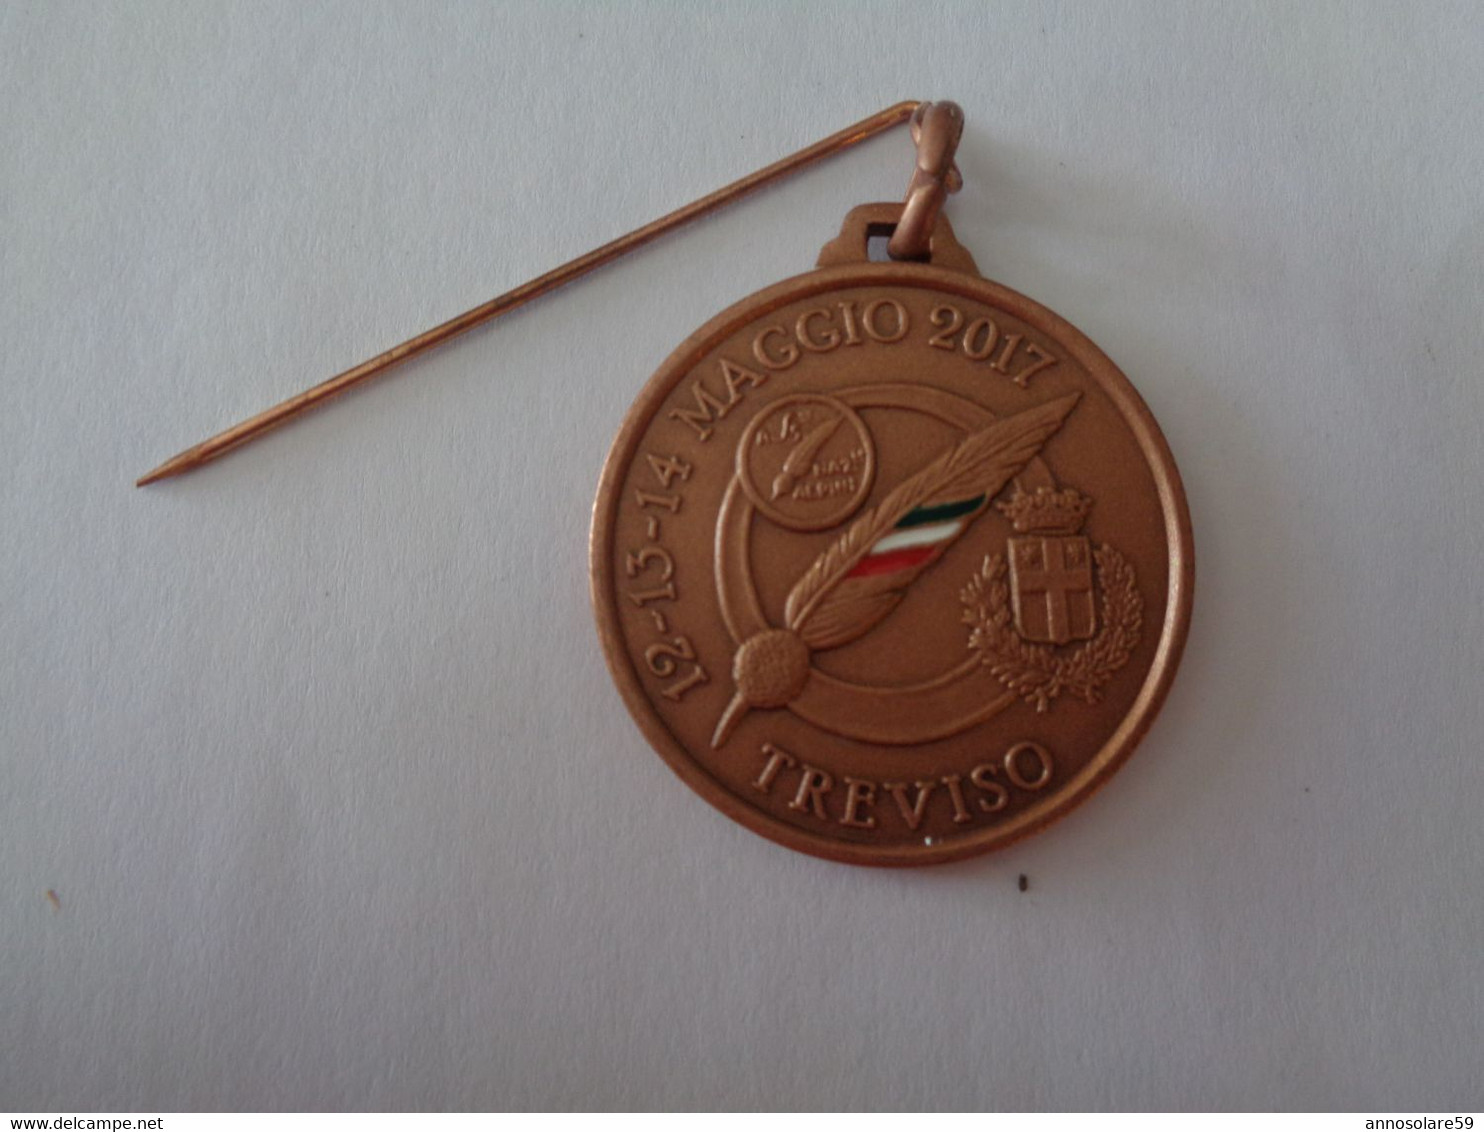 Medal, Medaglia Adunata Treviso 2017 - A.N.A. Associazione Nazionale Alpini  - LEGGI - Italien